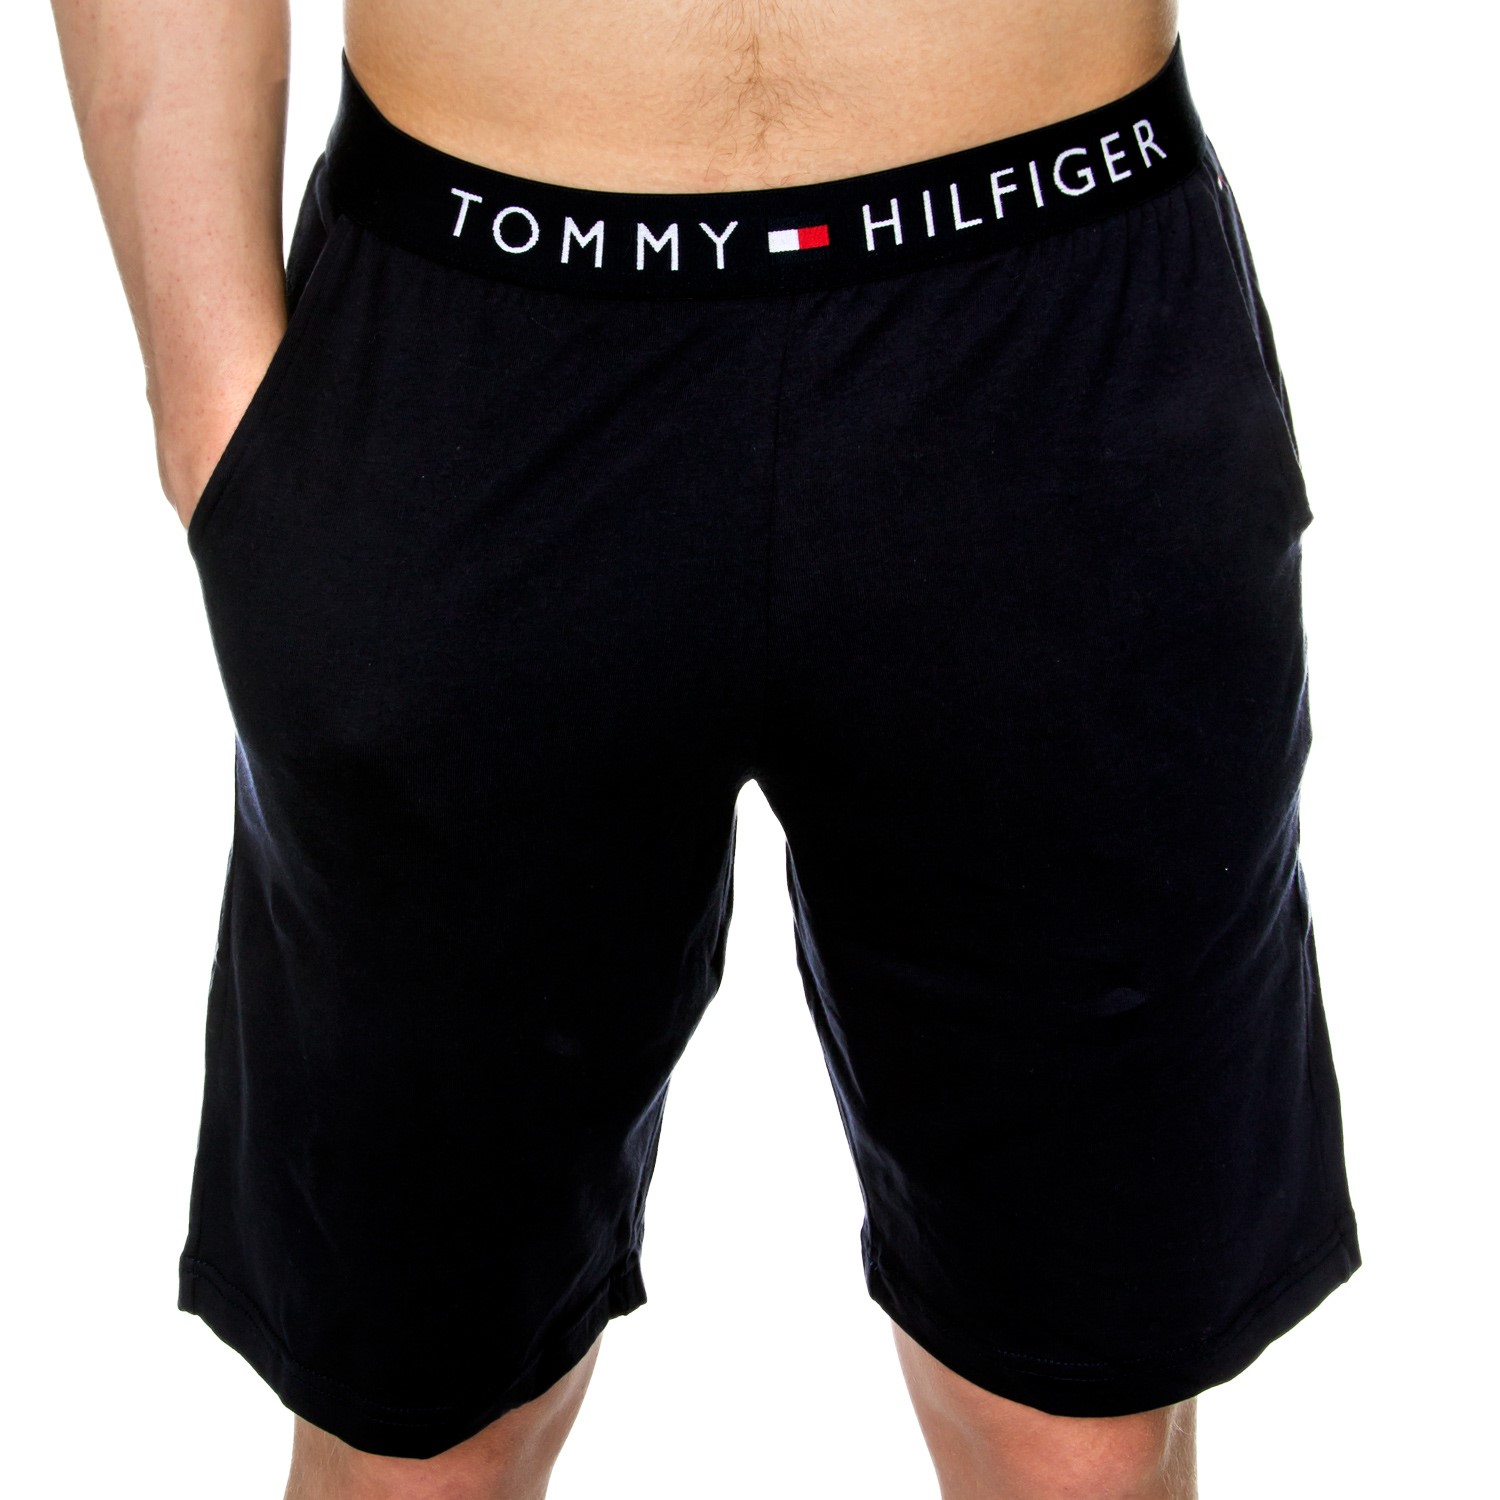 tommy hilfiger short shorts